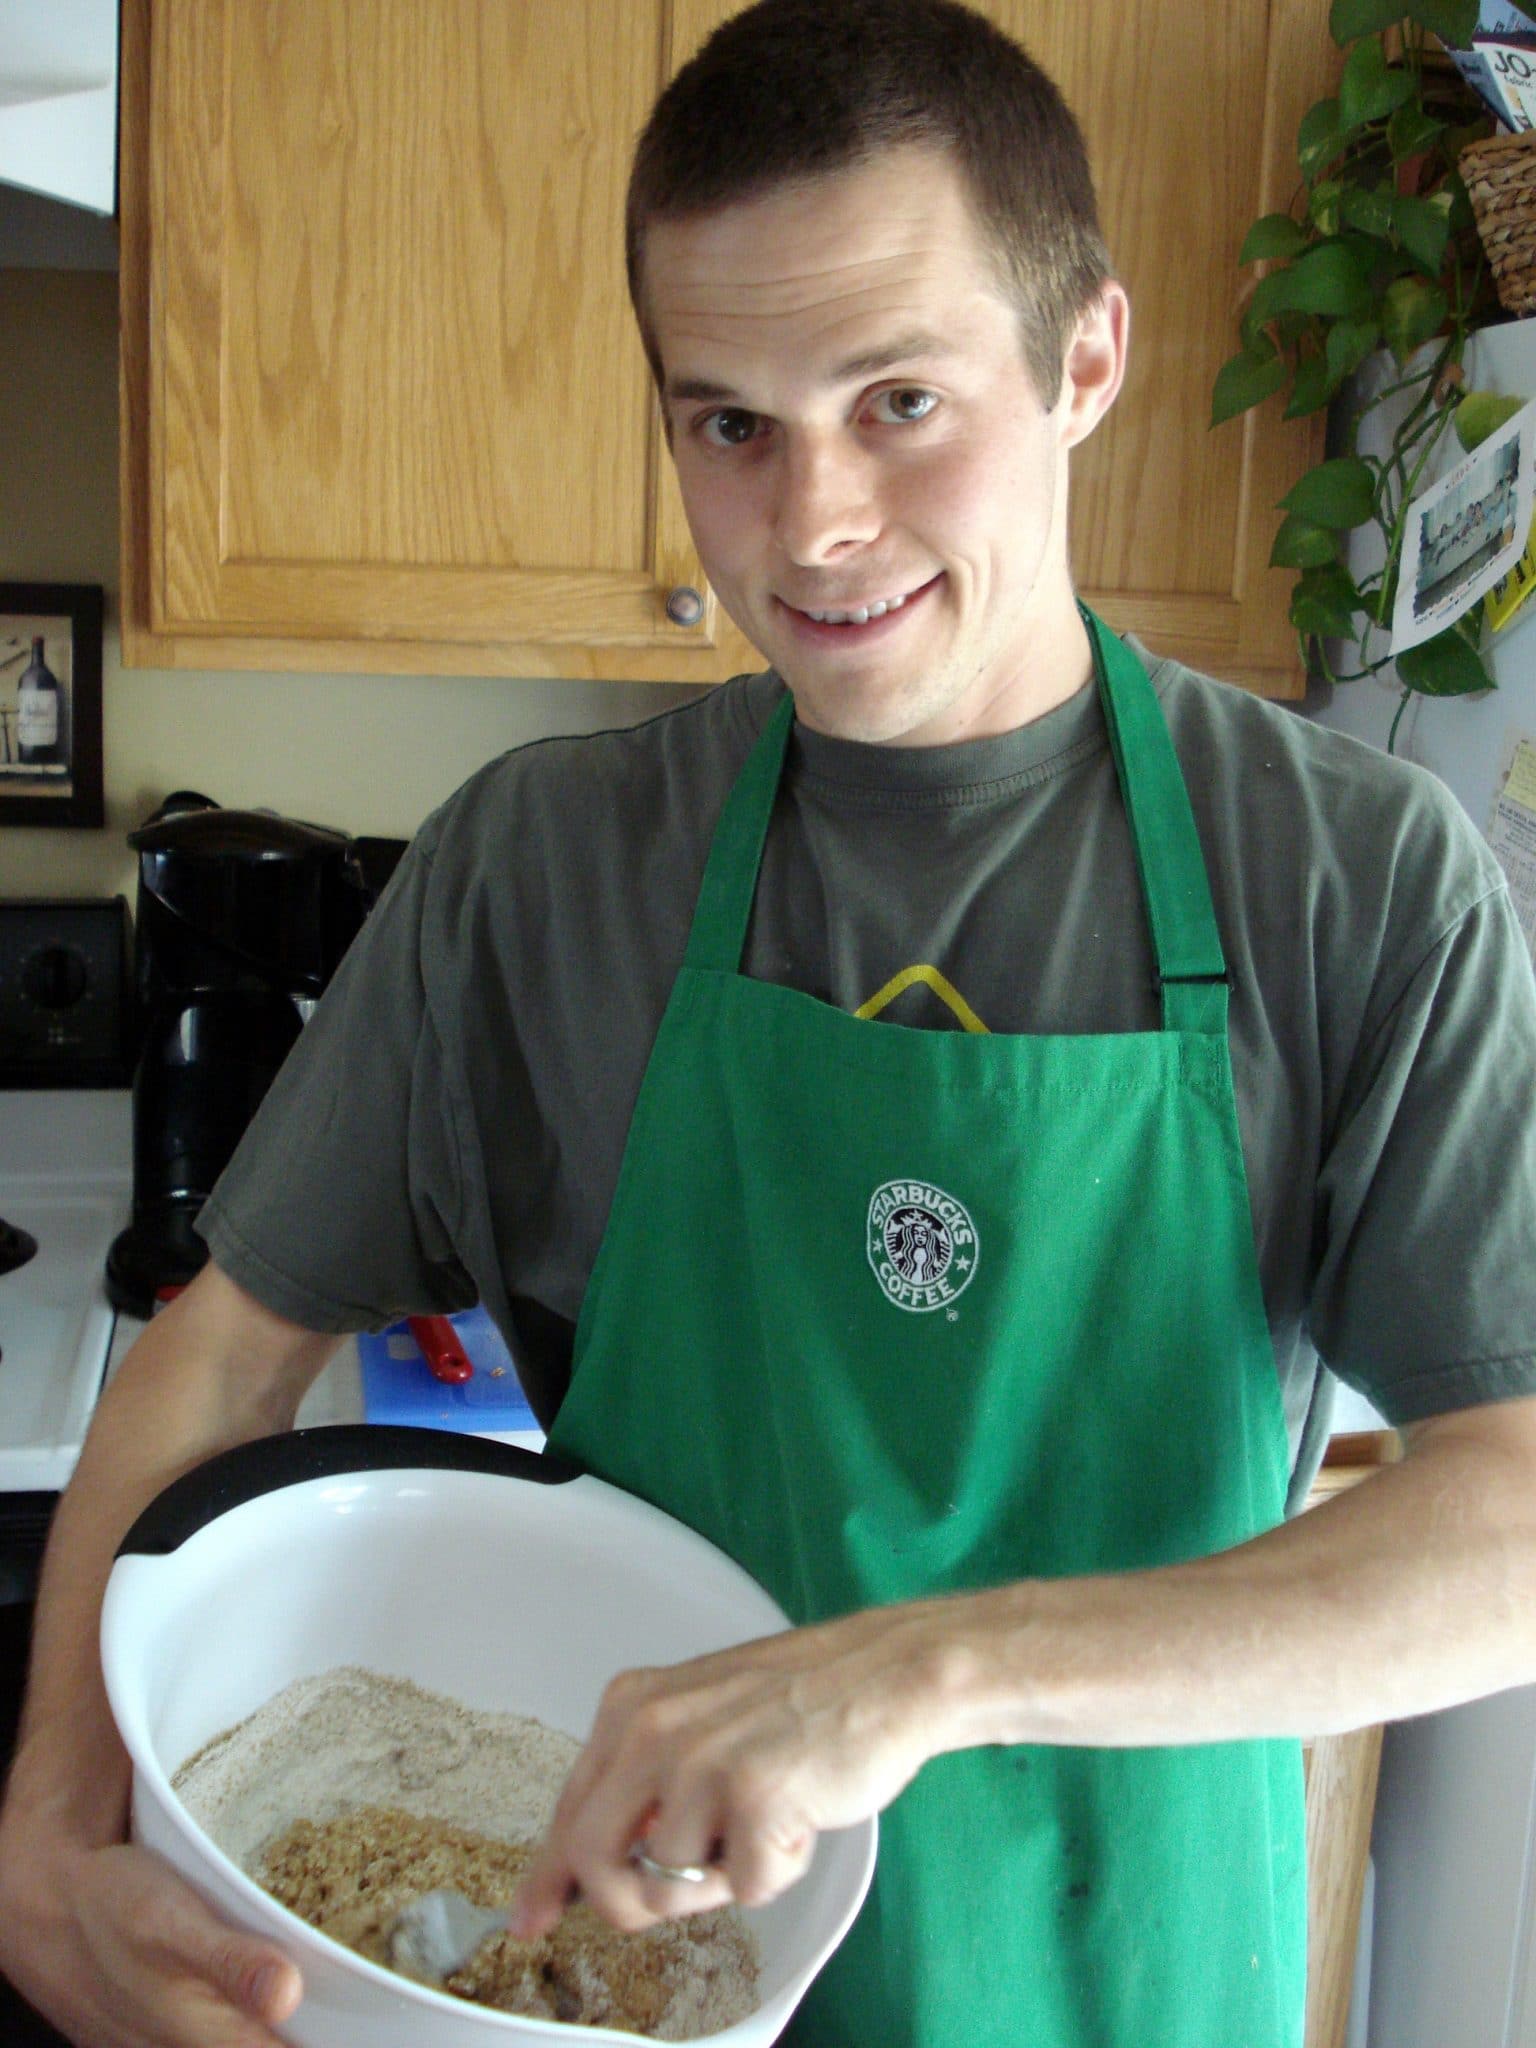 Matt, wearing apron, mixing dry ingredients for homemade pasta